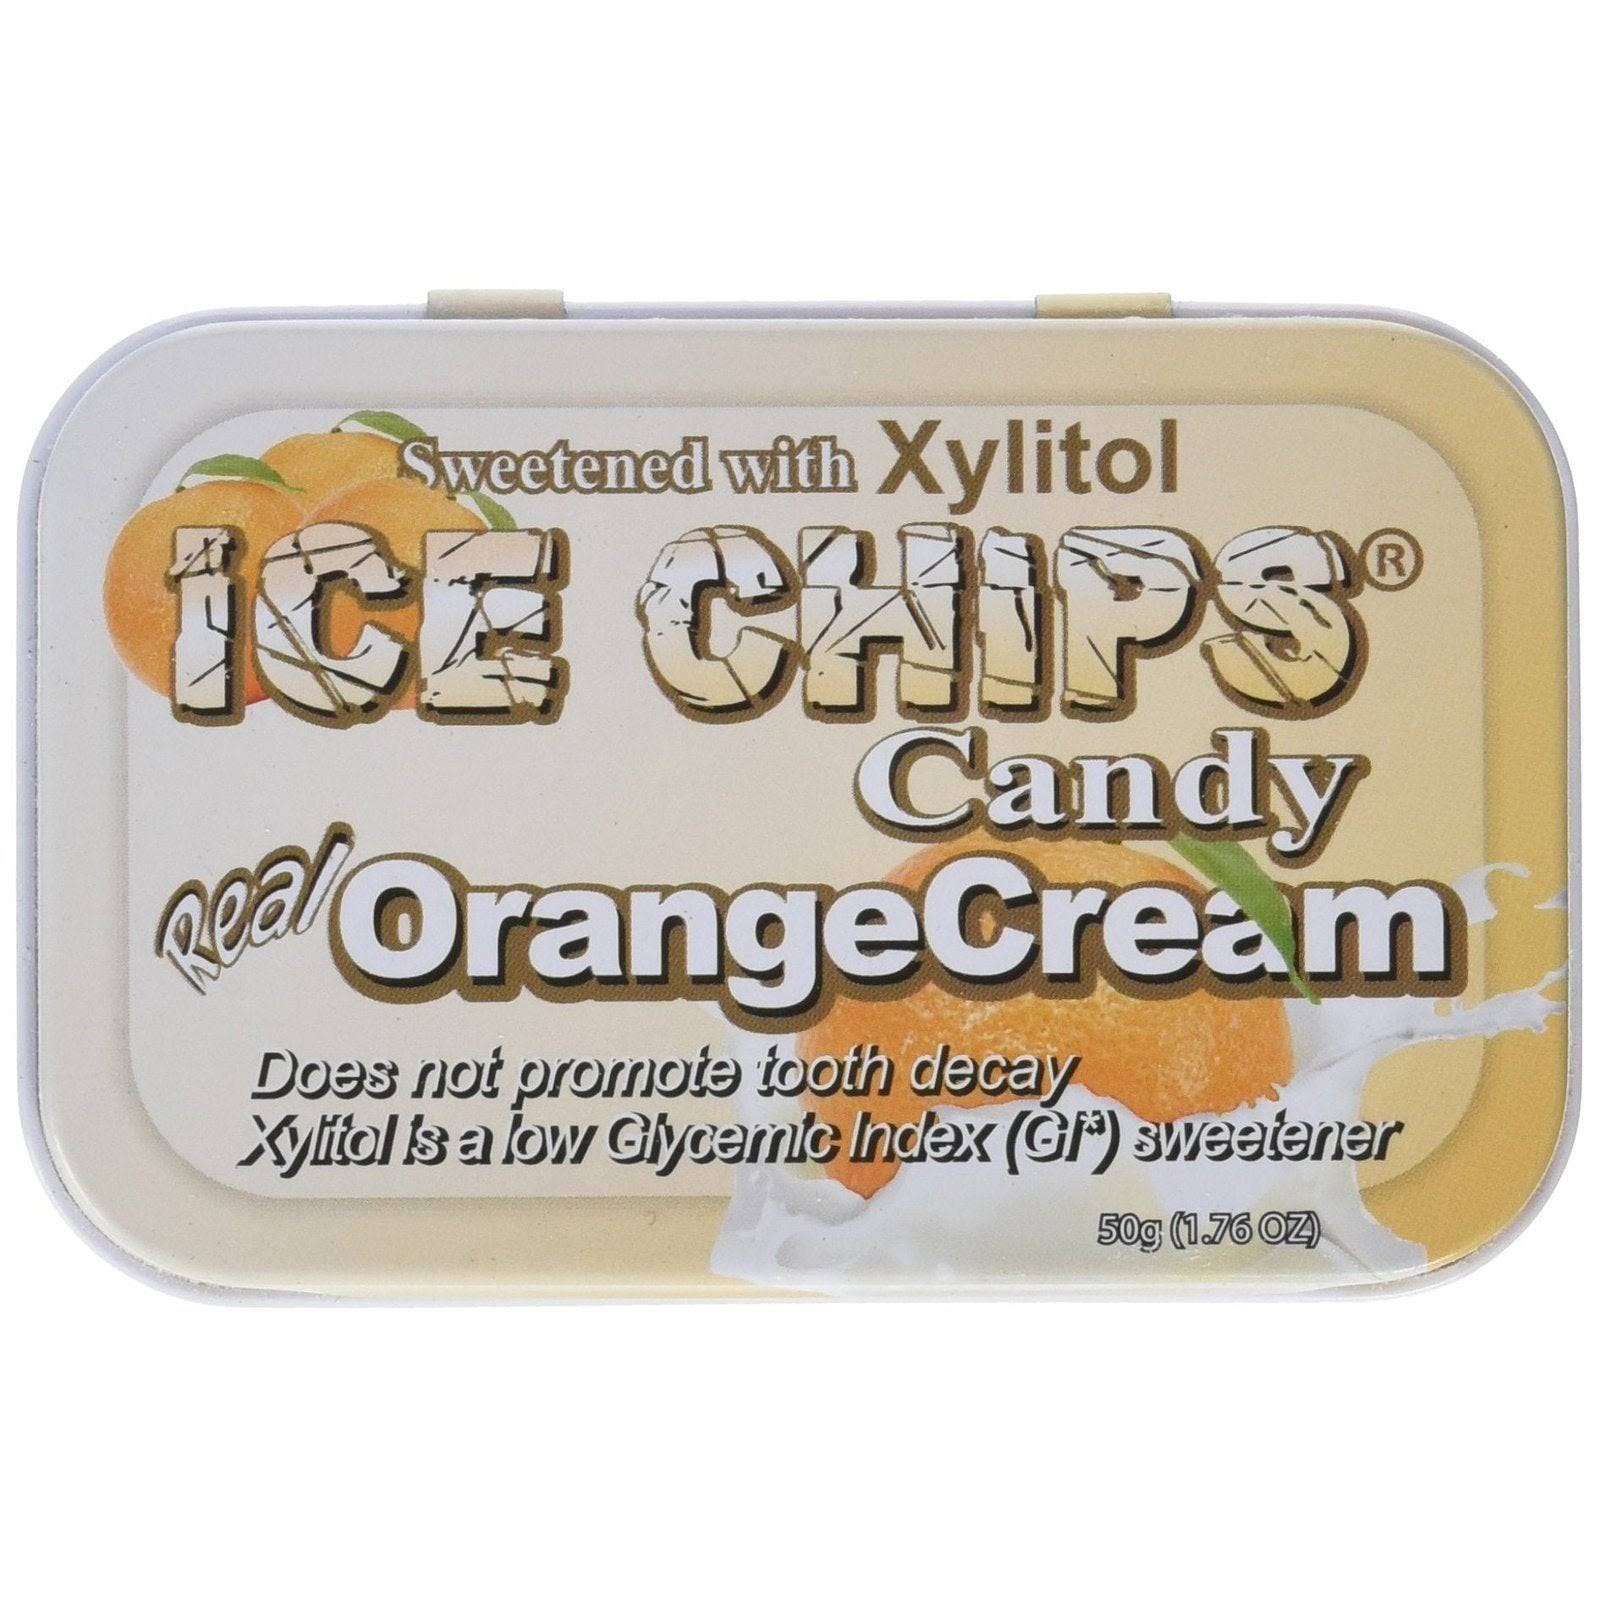 Hand Crafted Tin Ice Chips Candy - Orange Cream, 1.76oz